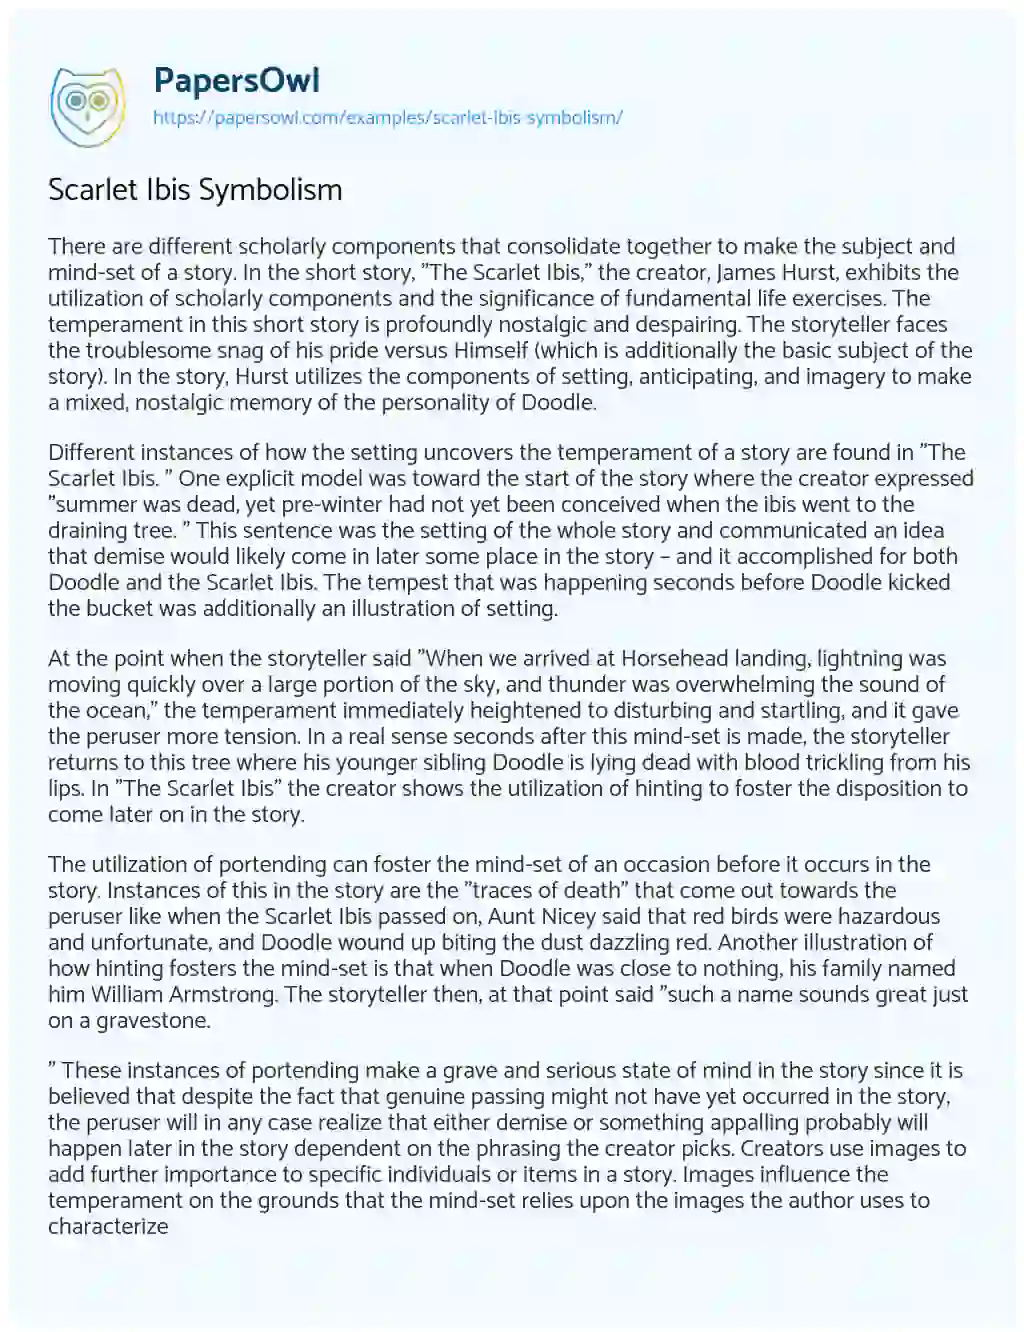 Scarlet Ibis Symbolism essay